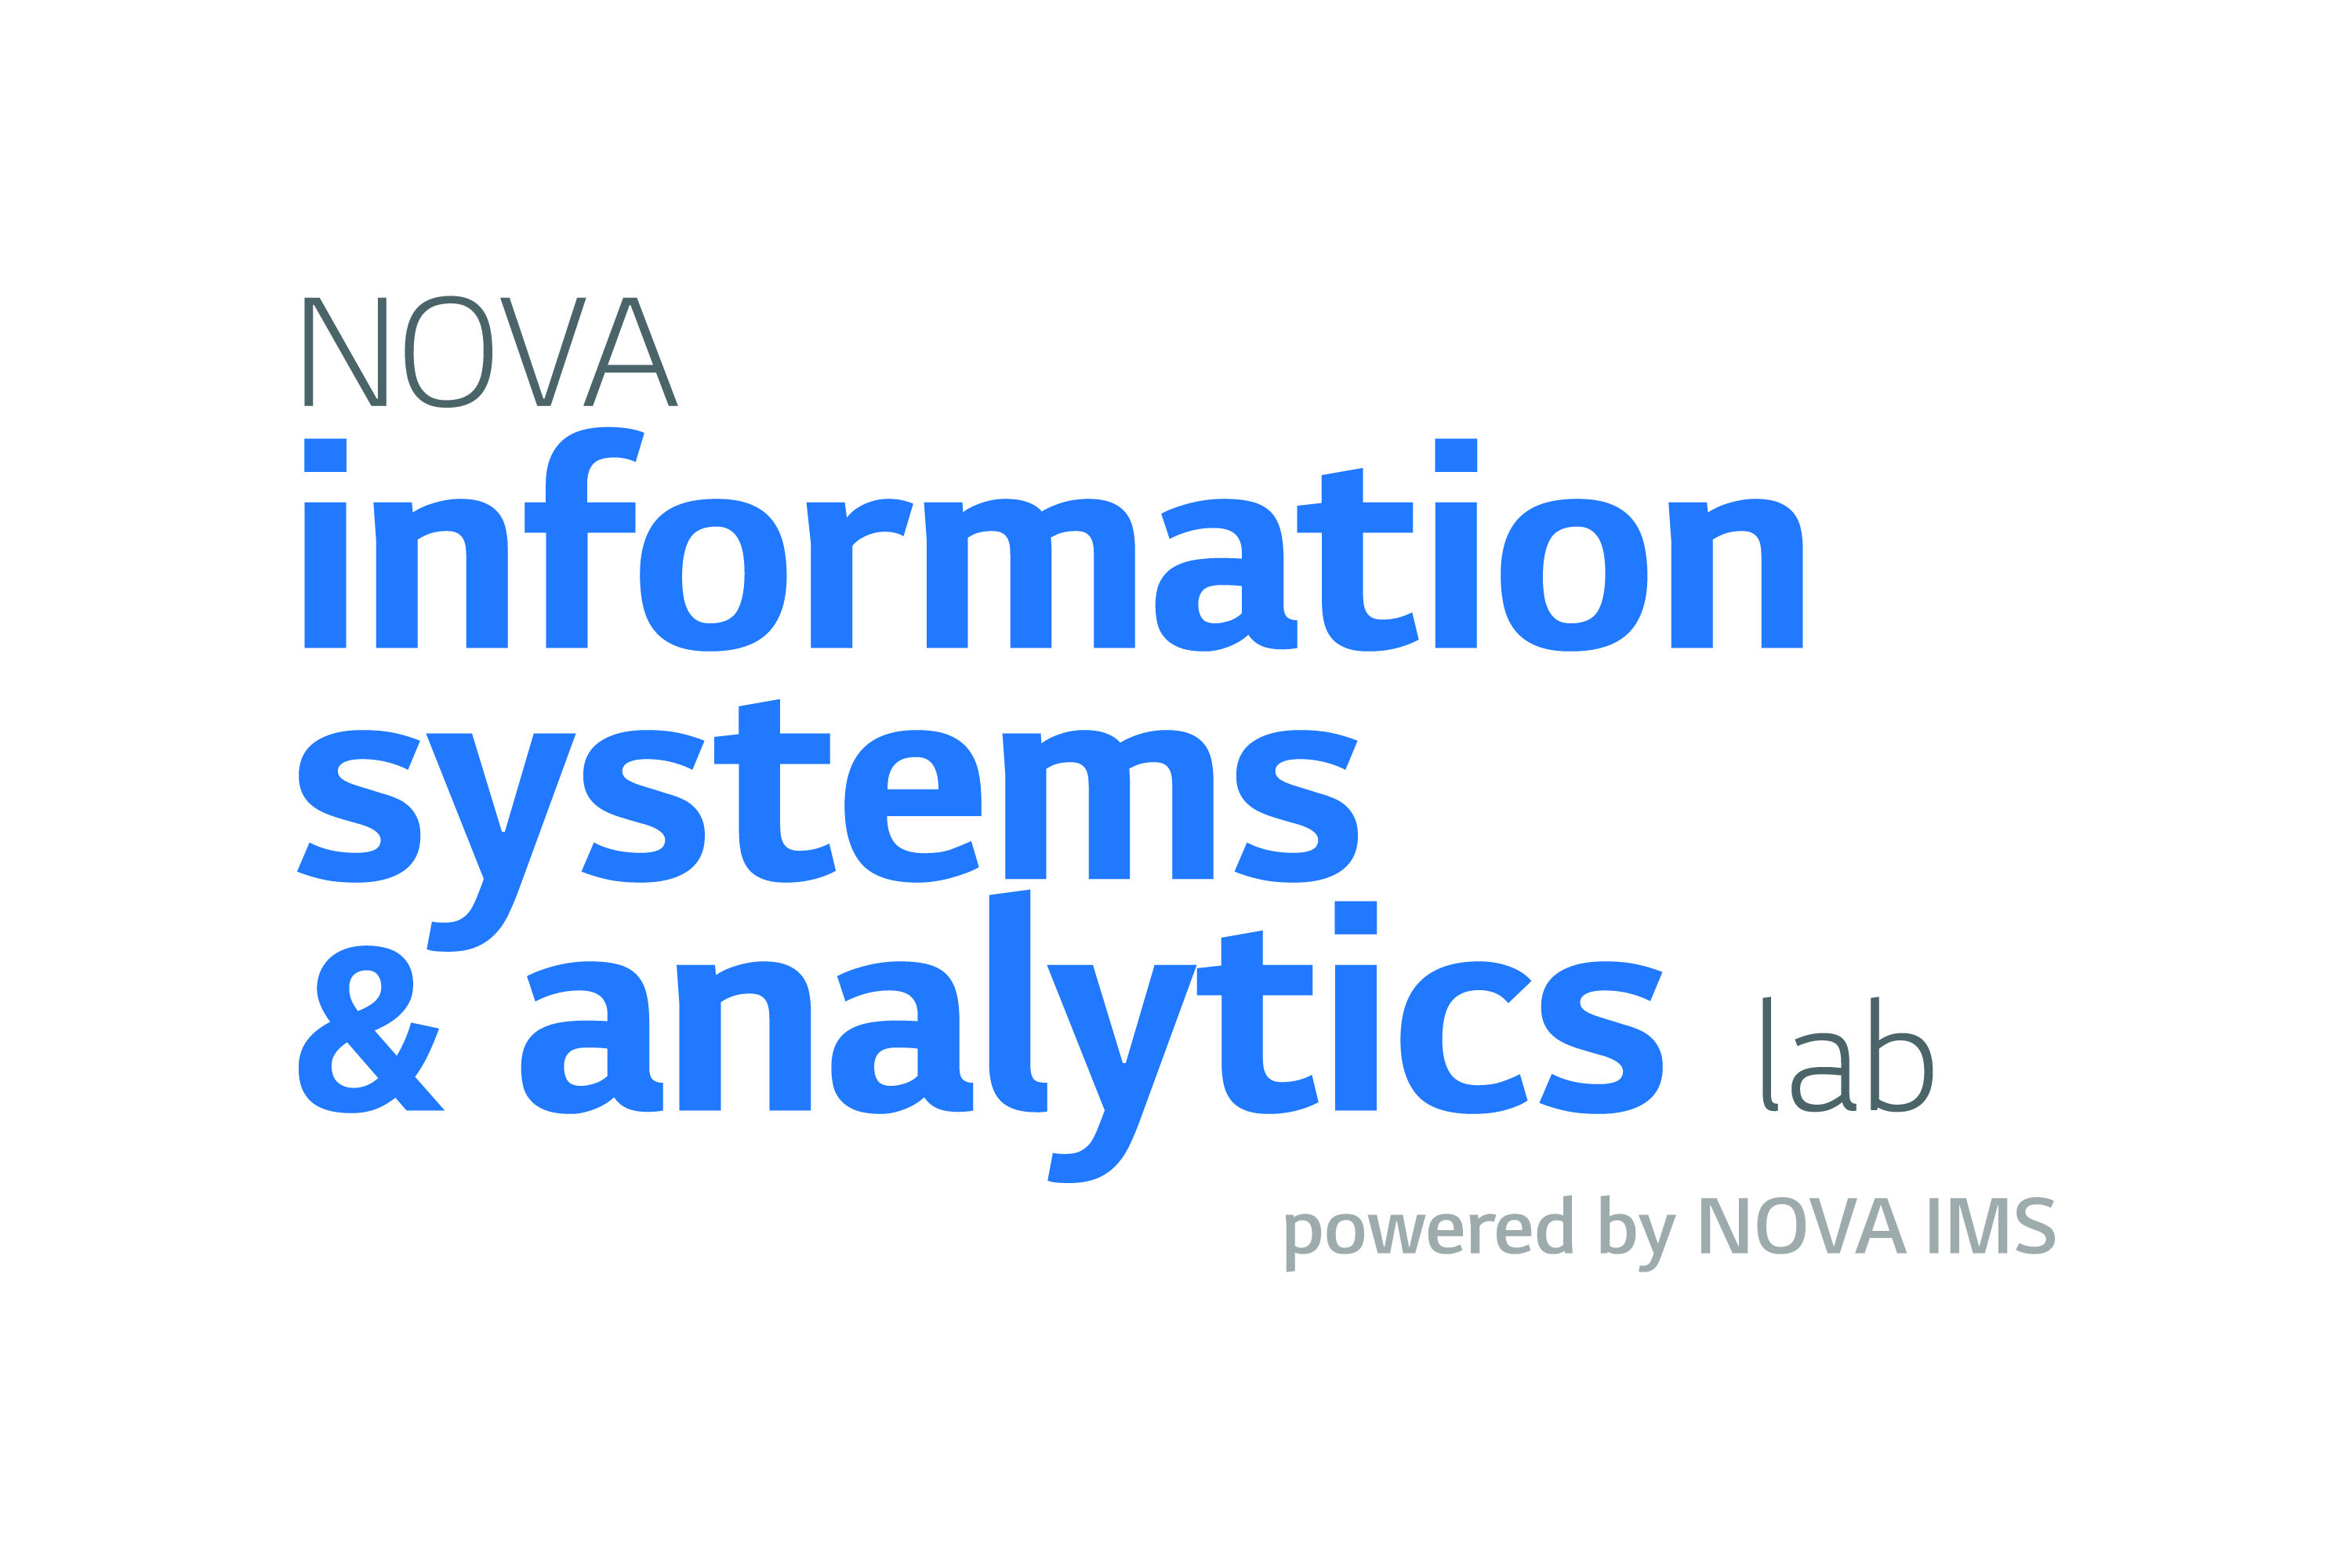 NOVA Information Systems & Analytics Lab image